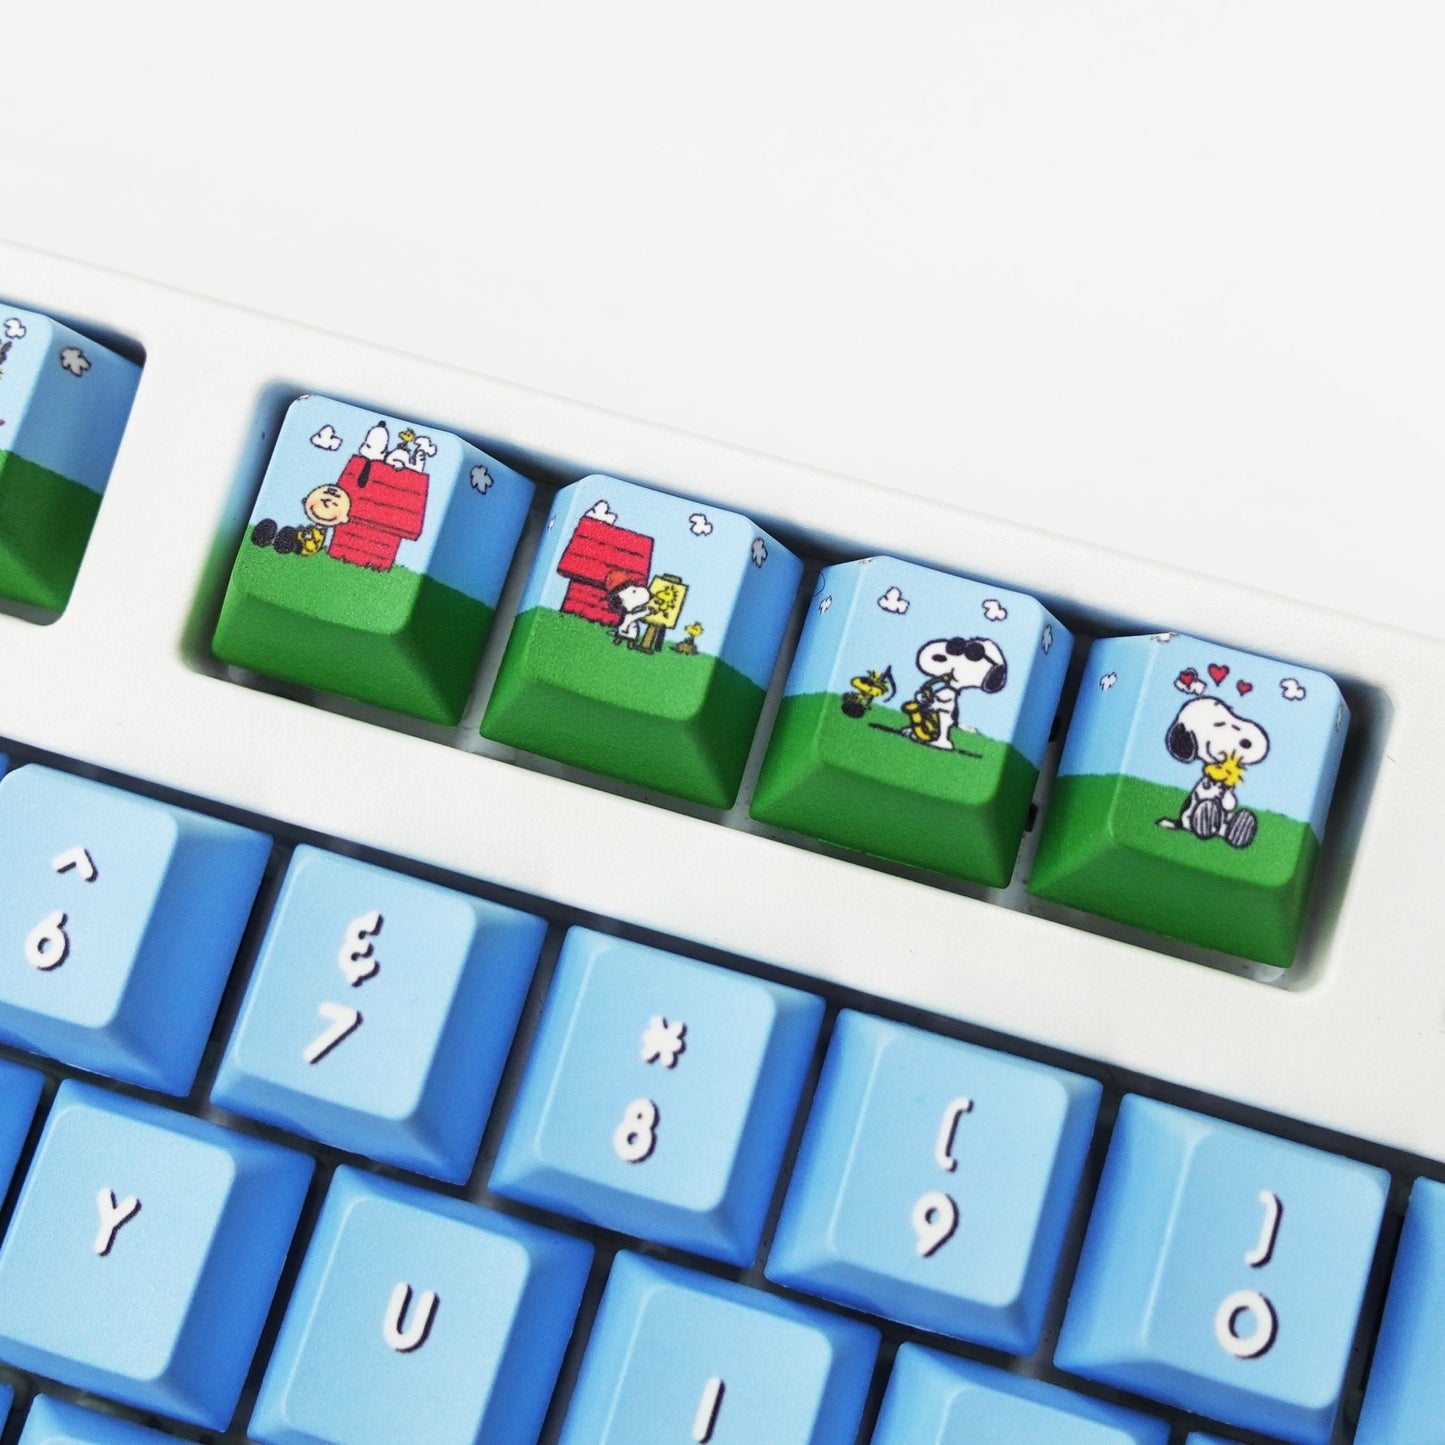 Snoopy Keyboard and Keycaps - Goblintechkeys